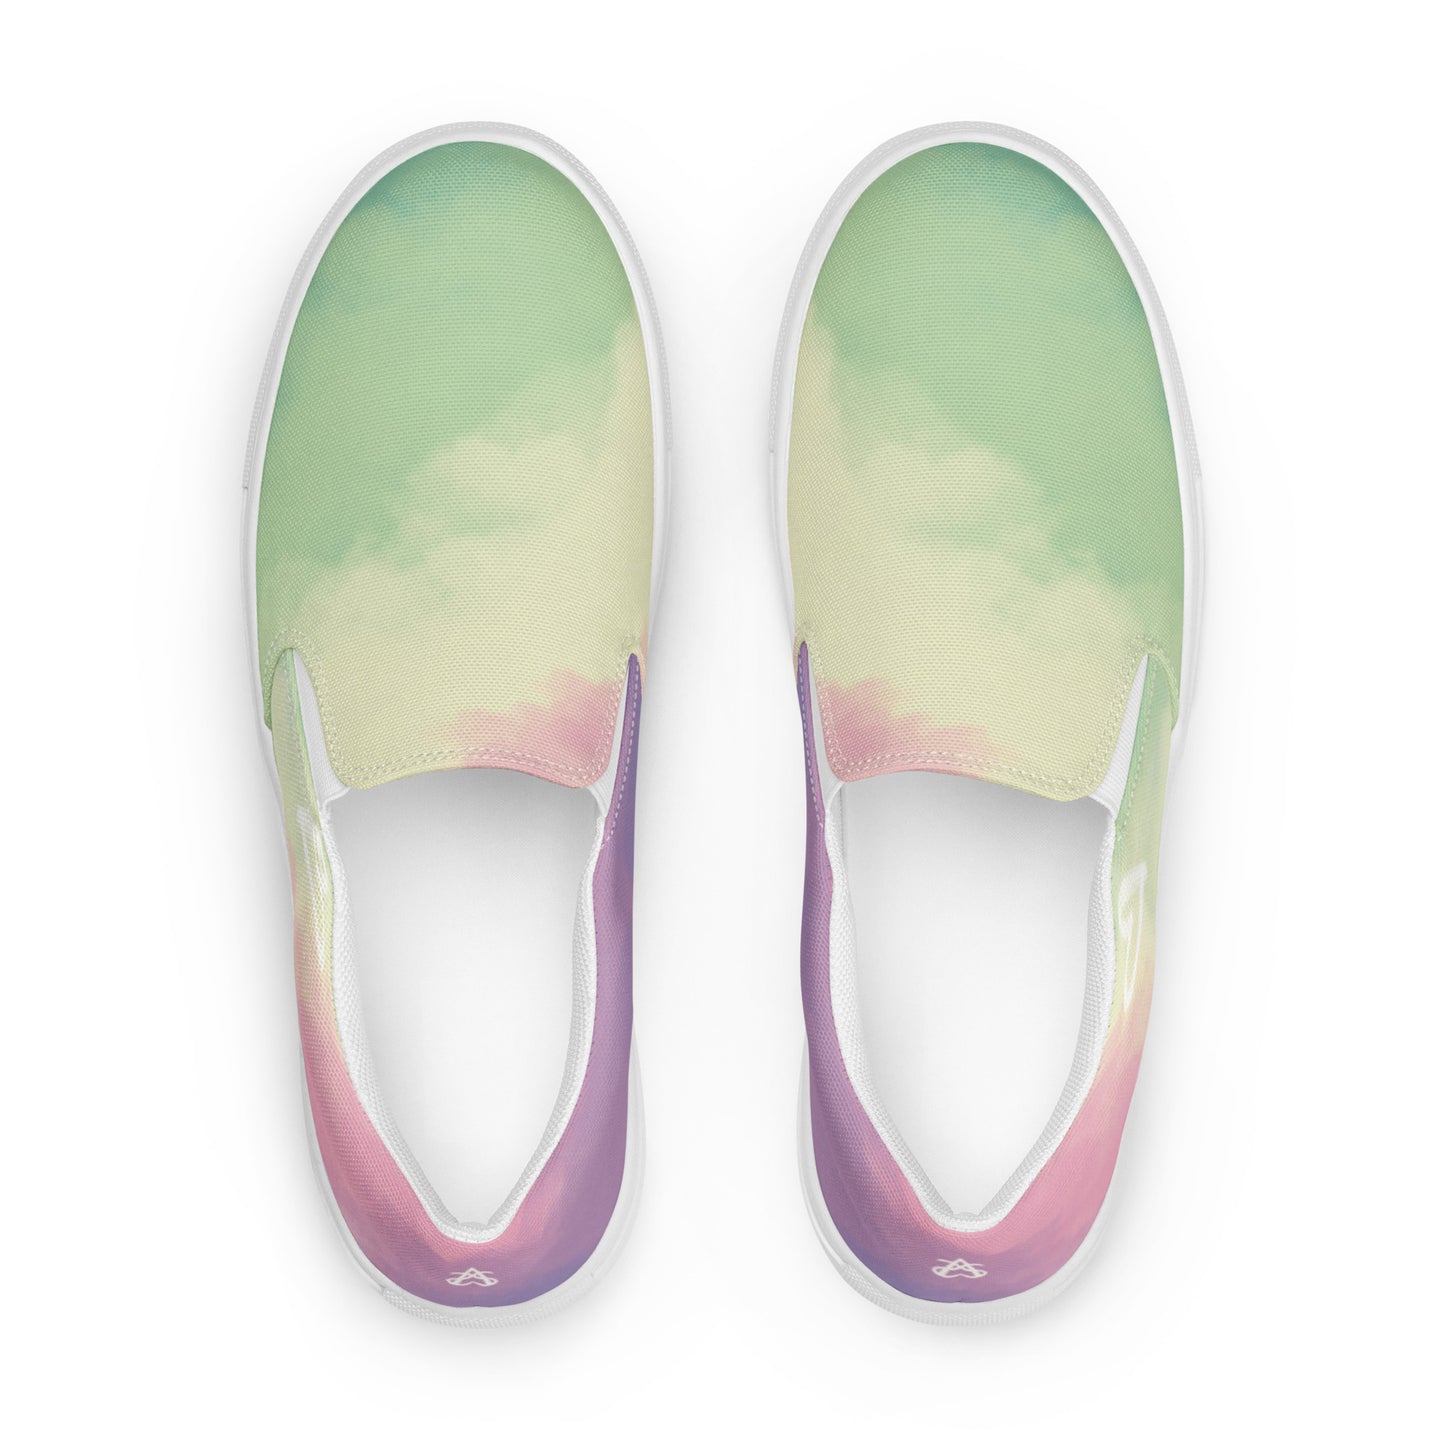 Cloudy Genderfae Slip-on Canvas Shoes (Fem Sizing)